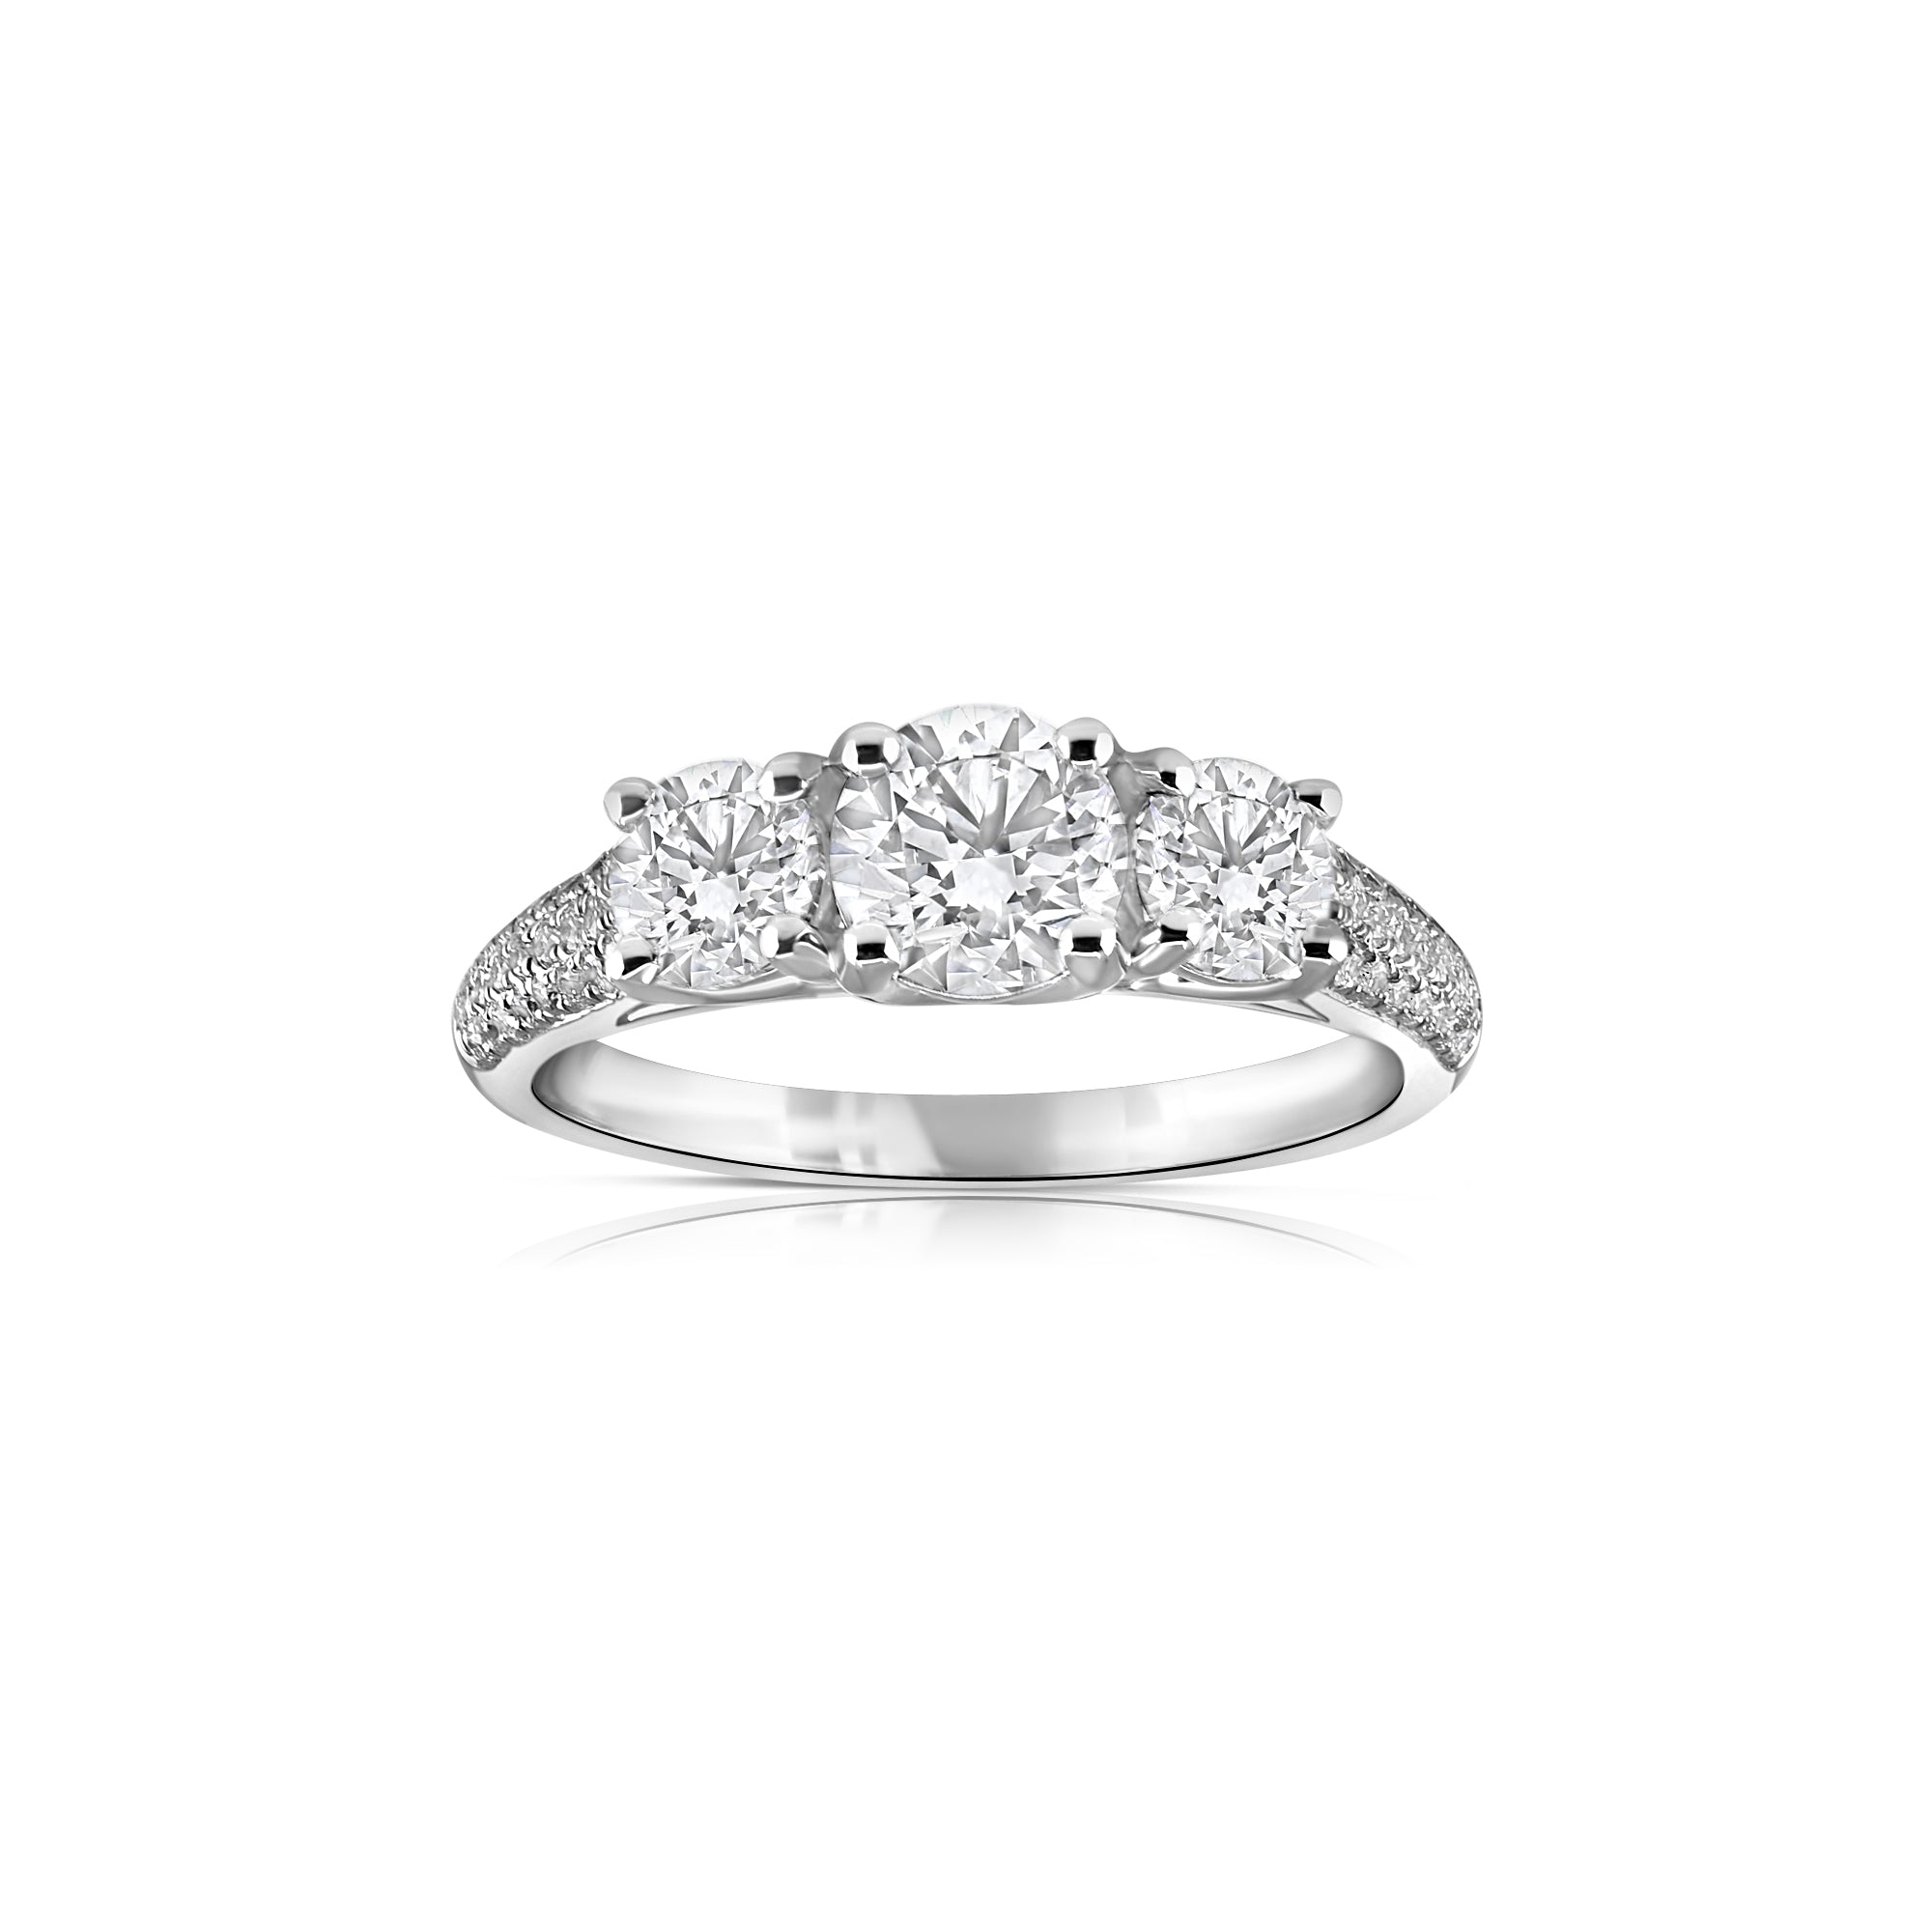 0.77ct round brilliant cut diamond trilogy engagement ring, platinum, G/H colour, SI clarity